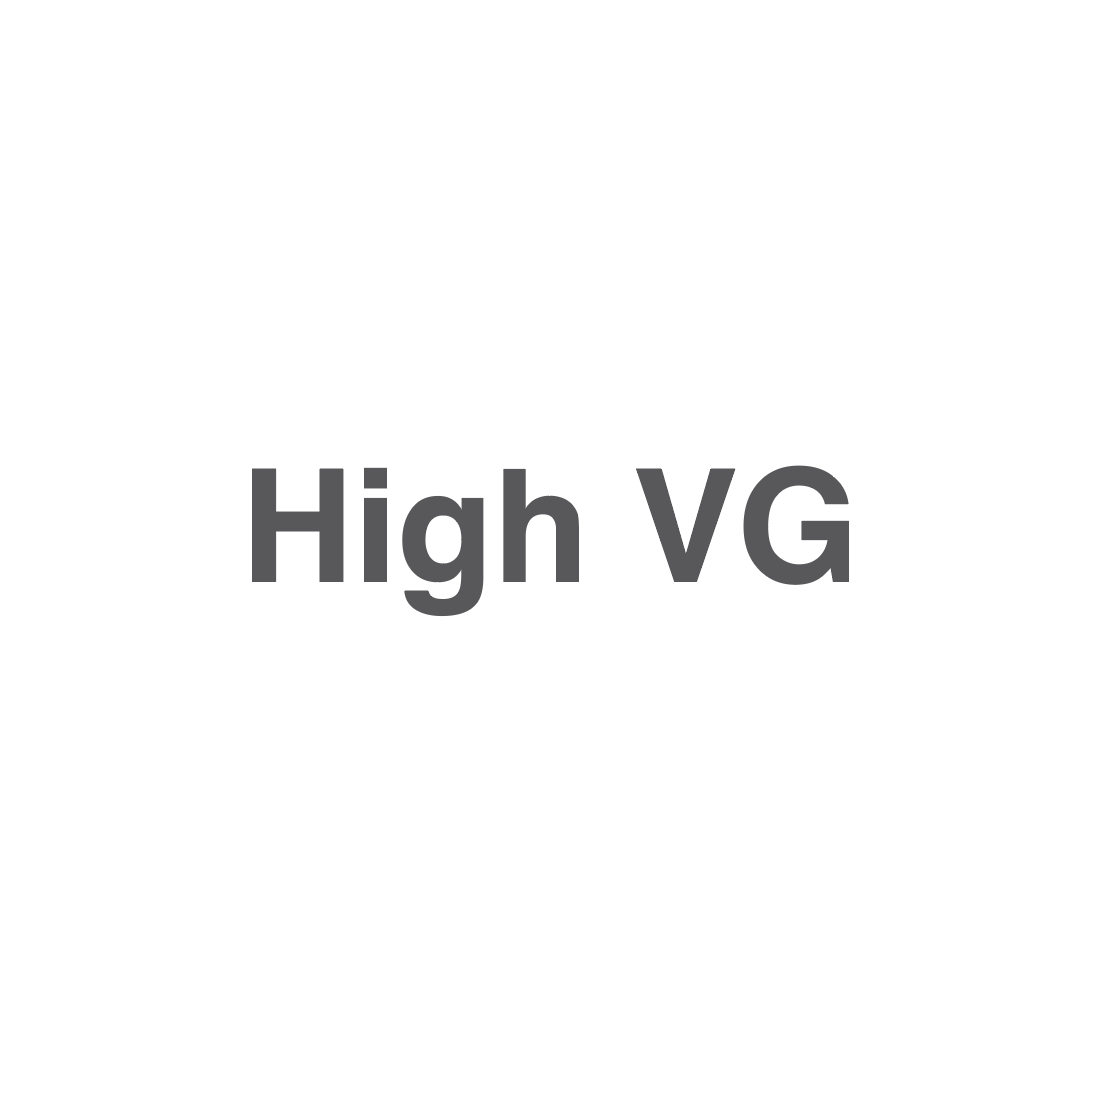 High VG